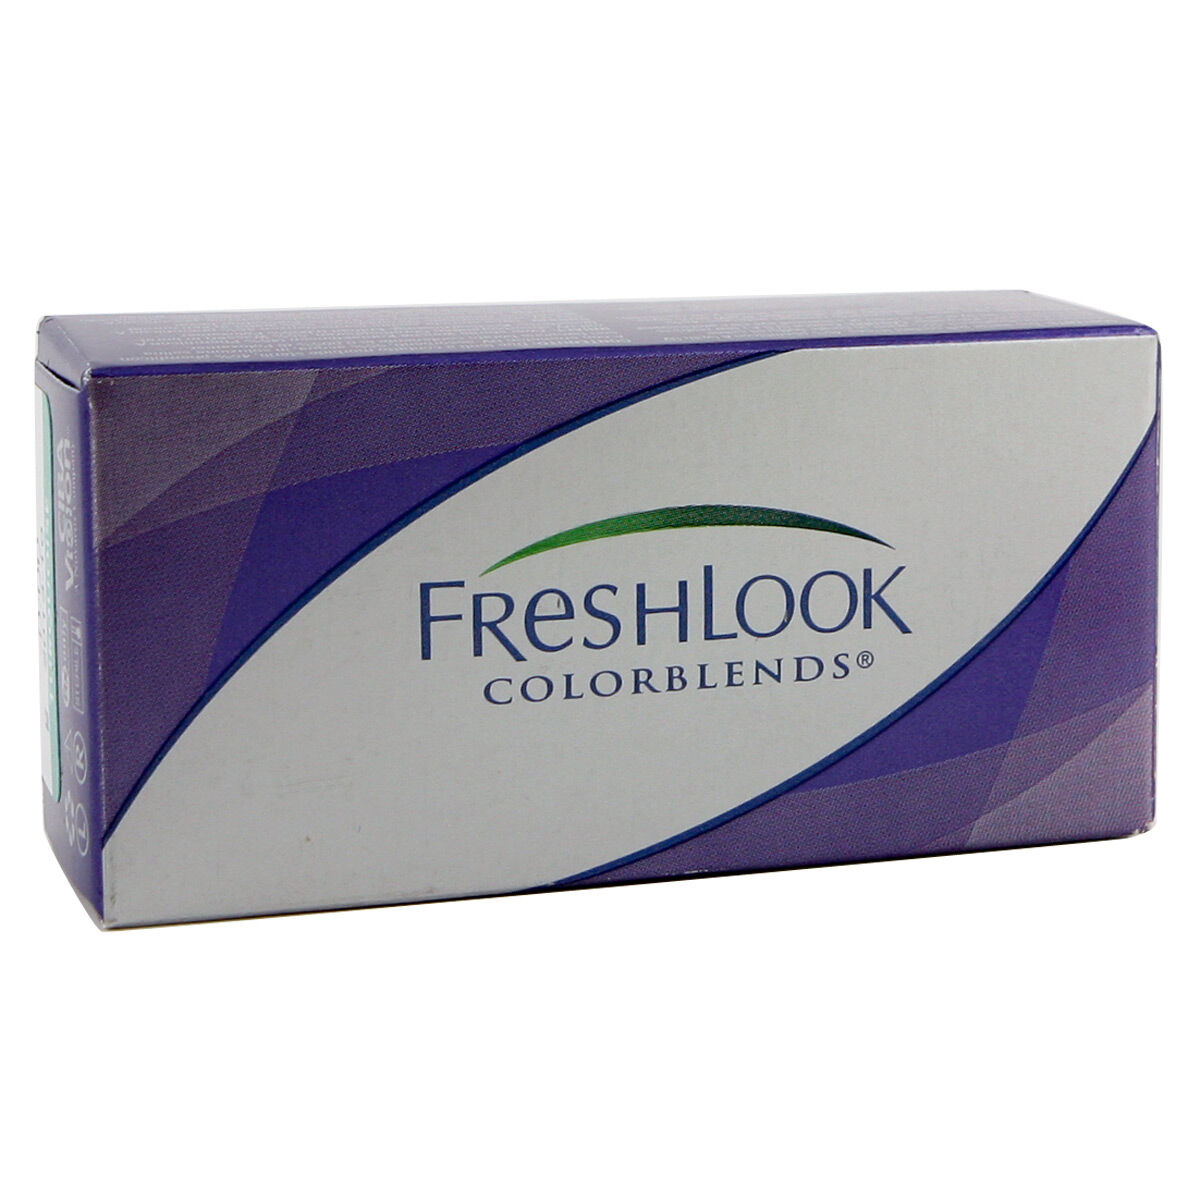 Alcon Freshlook Colorblends (2 Contact Lenses), Honey, Ciba Vision/Alcon, Monthly Coloured Lenses, Phemfilcon A